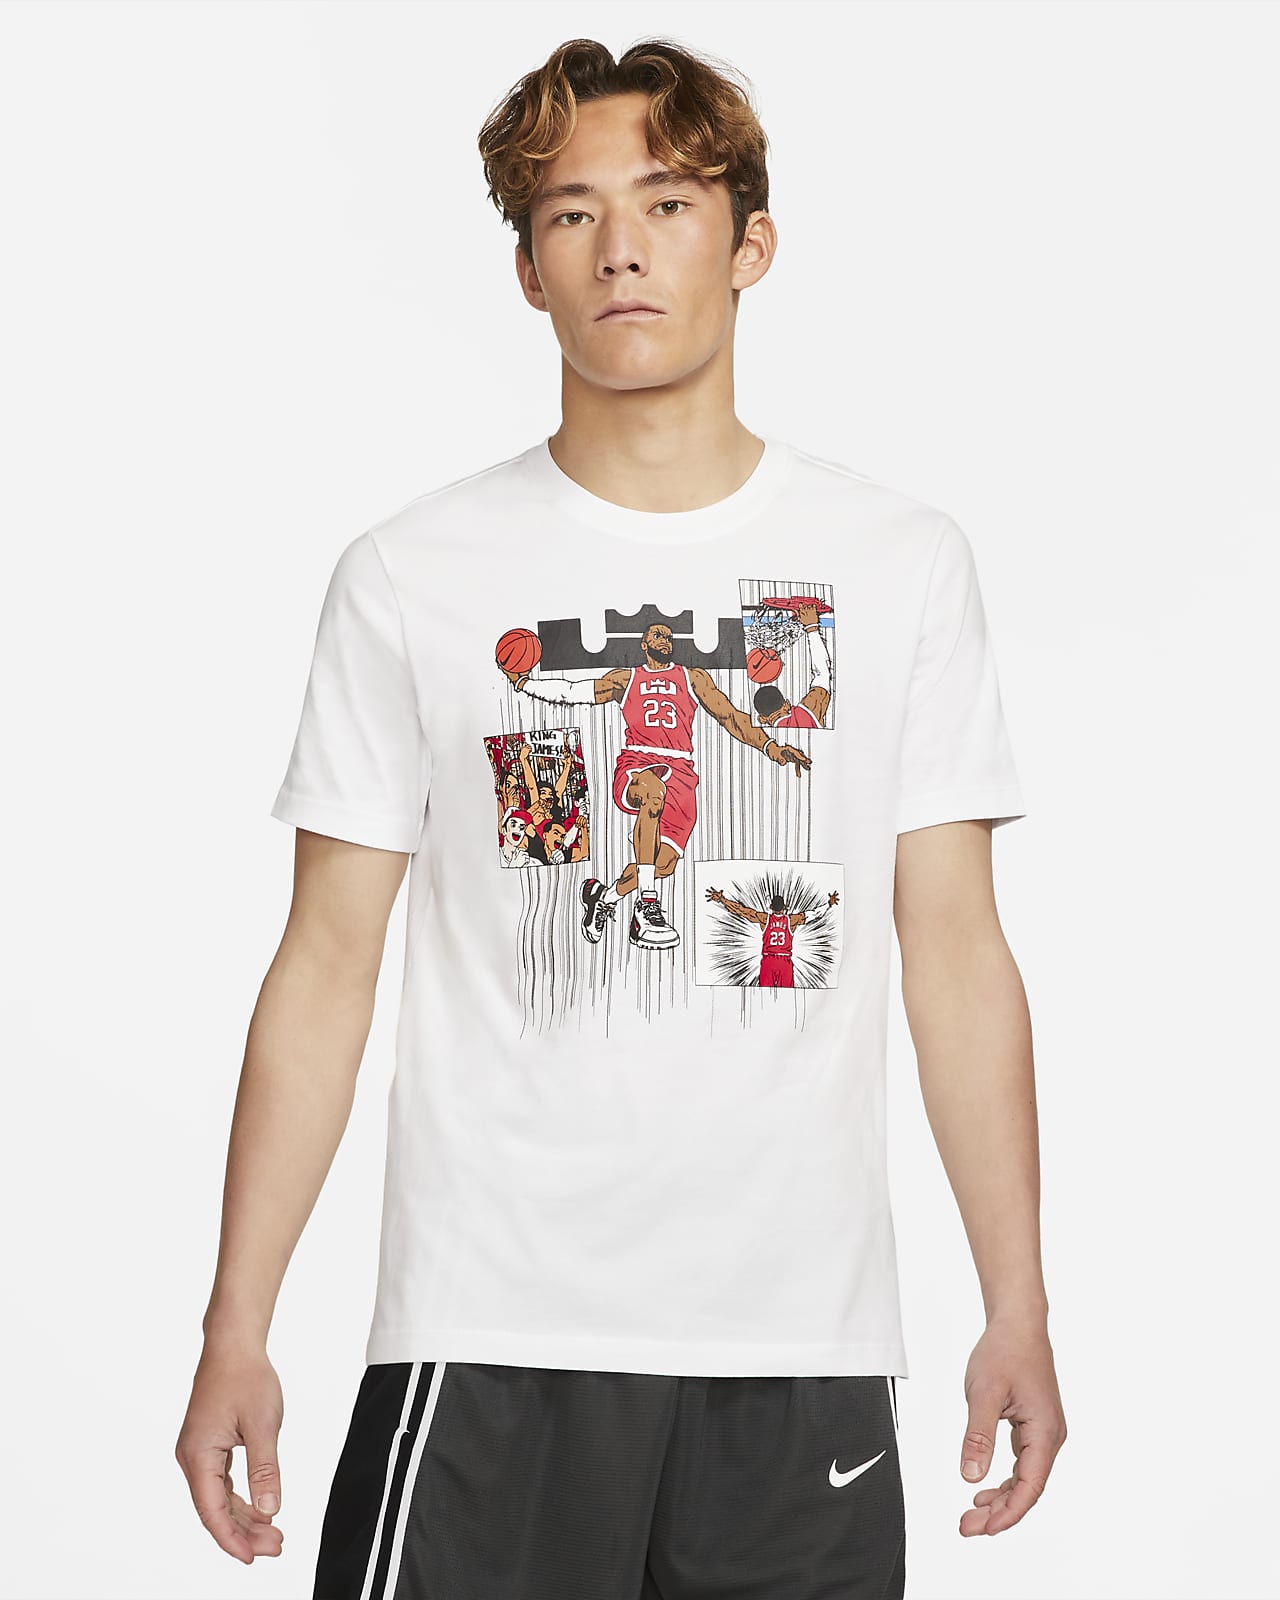 Nike公式 レブロン ロゴ メンズ バスケットボール Tシャツ オンラインストア 通販サイト